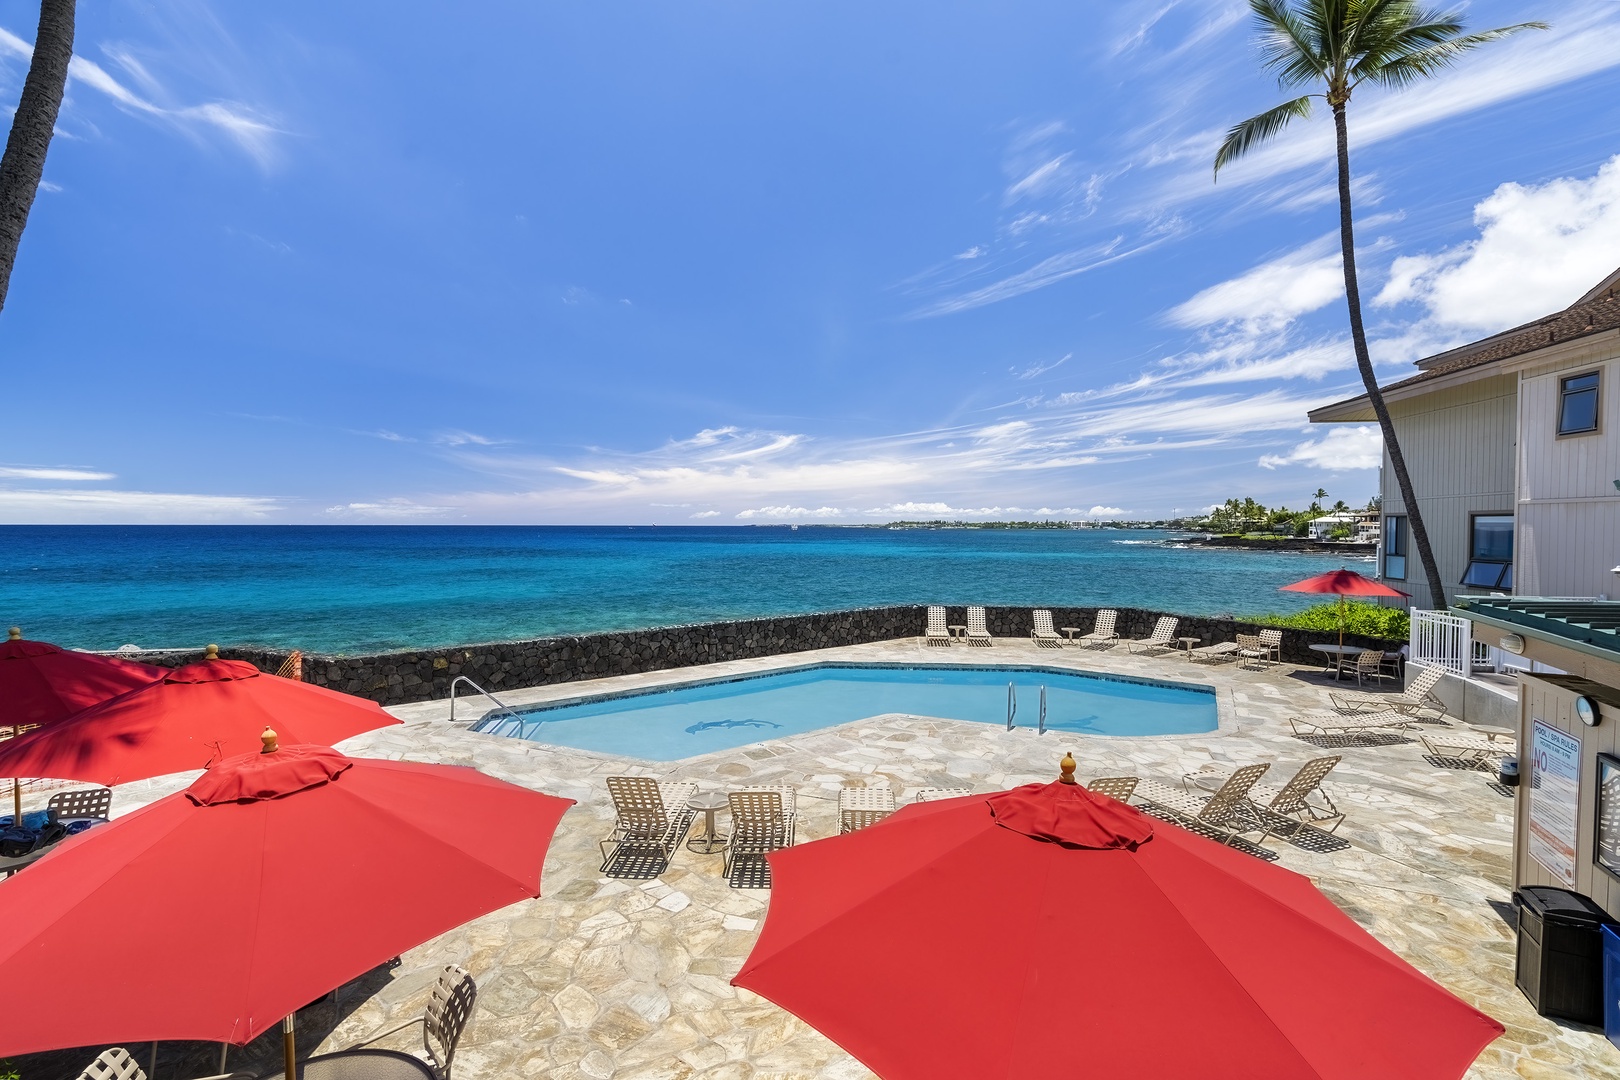 Kailua Kona Vacation Rentals, Sea Village 1105 - Enjoy the Sea Village pool!